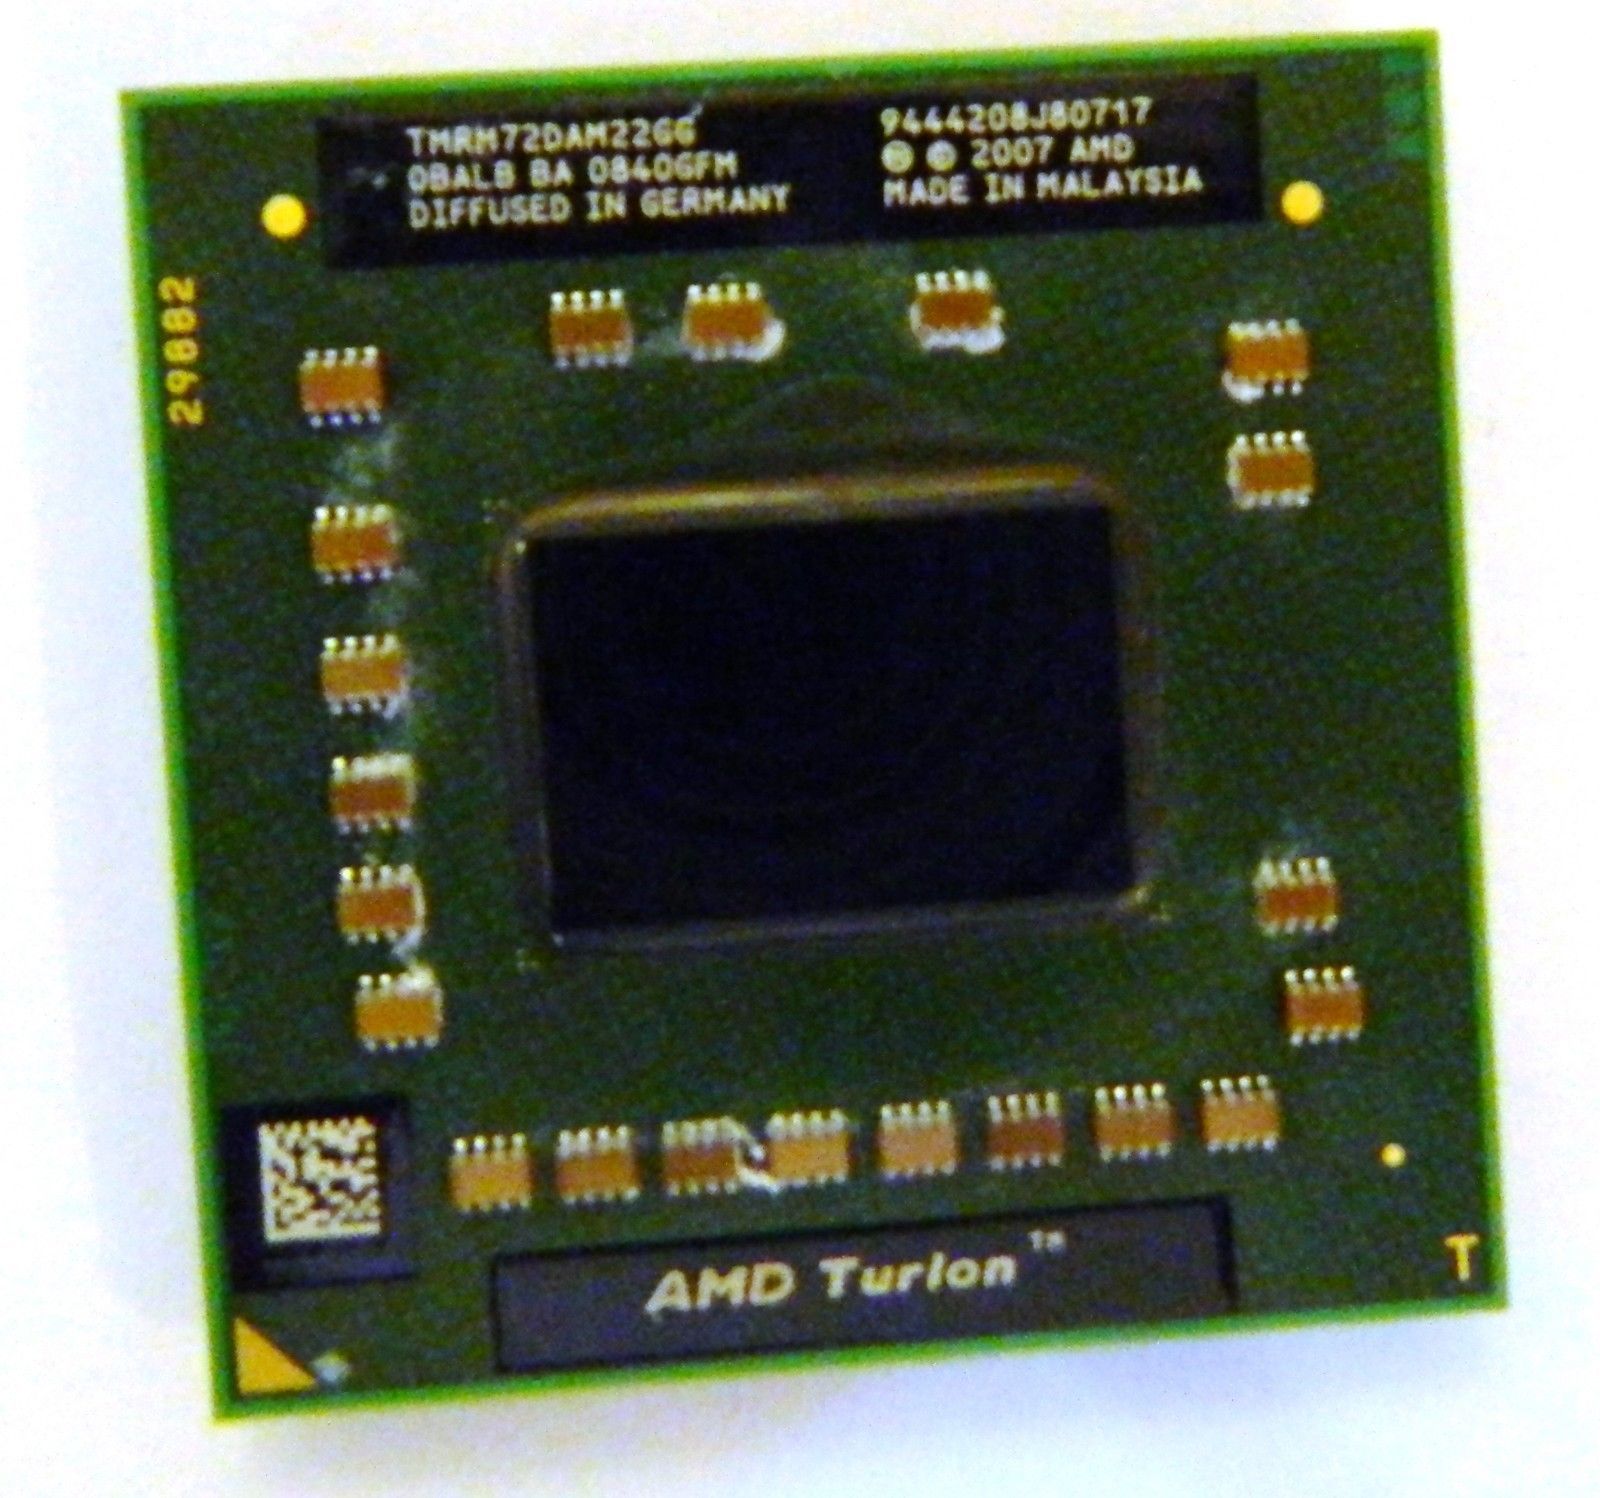 AMD CPU TURION X2 RM-72 DUAL CORE 2.1GHz PROCESSOR TMRM72DAM22GG - $5.89